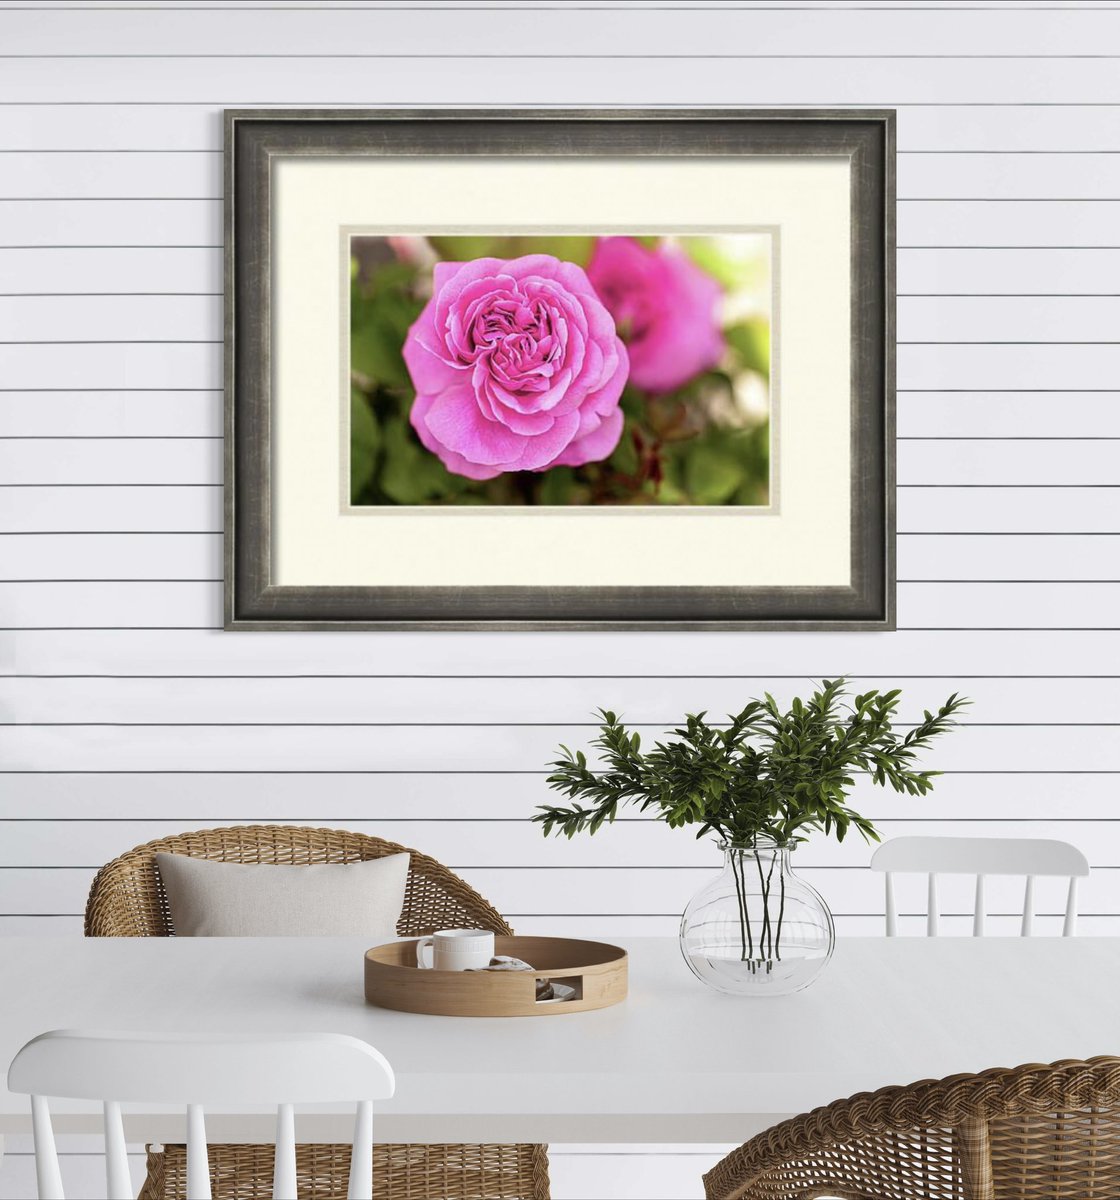 An English Rose #wallart and more..

HERE: 5-tanya-smith.pixels.com/featured/an-en…

#WallArtDecor #rose #pink #PhotographyIsArt #FlowersOnFriday #buyintoart #FillThatEmptyWall